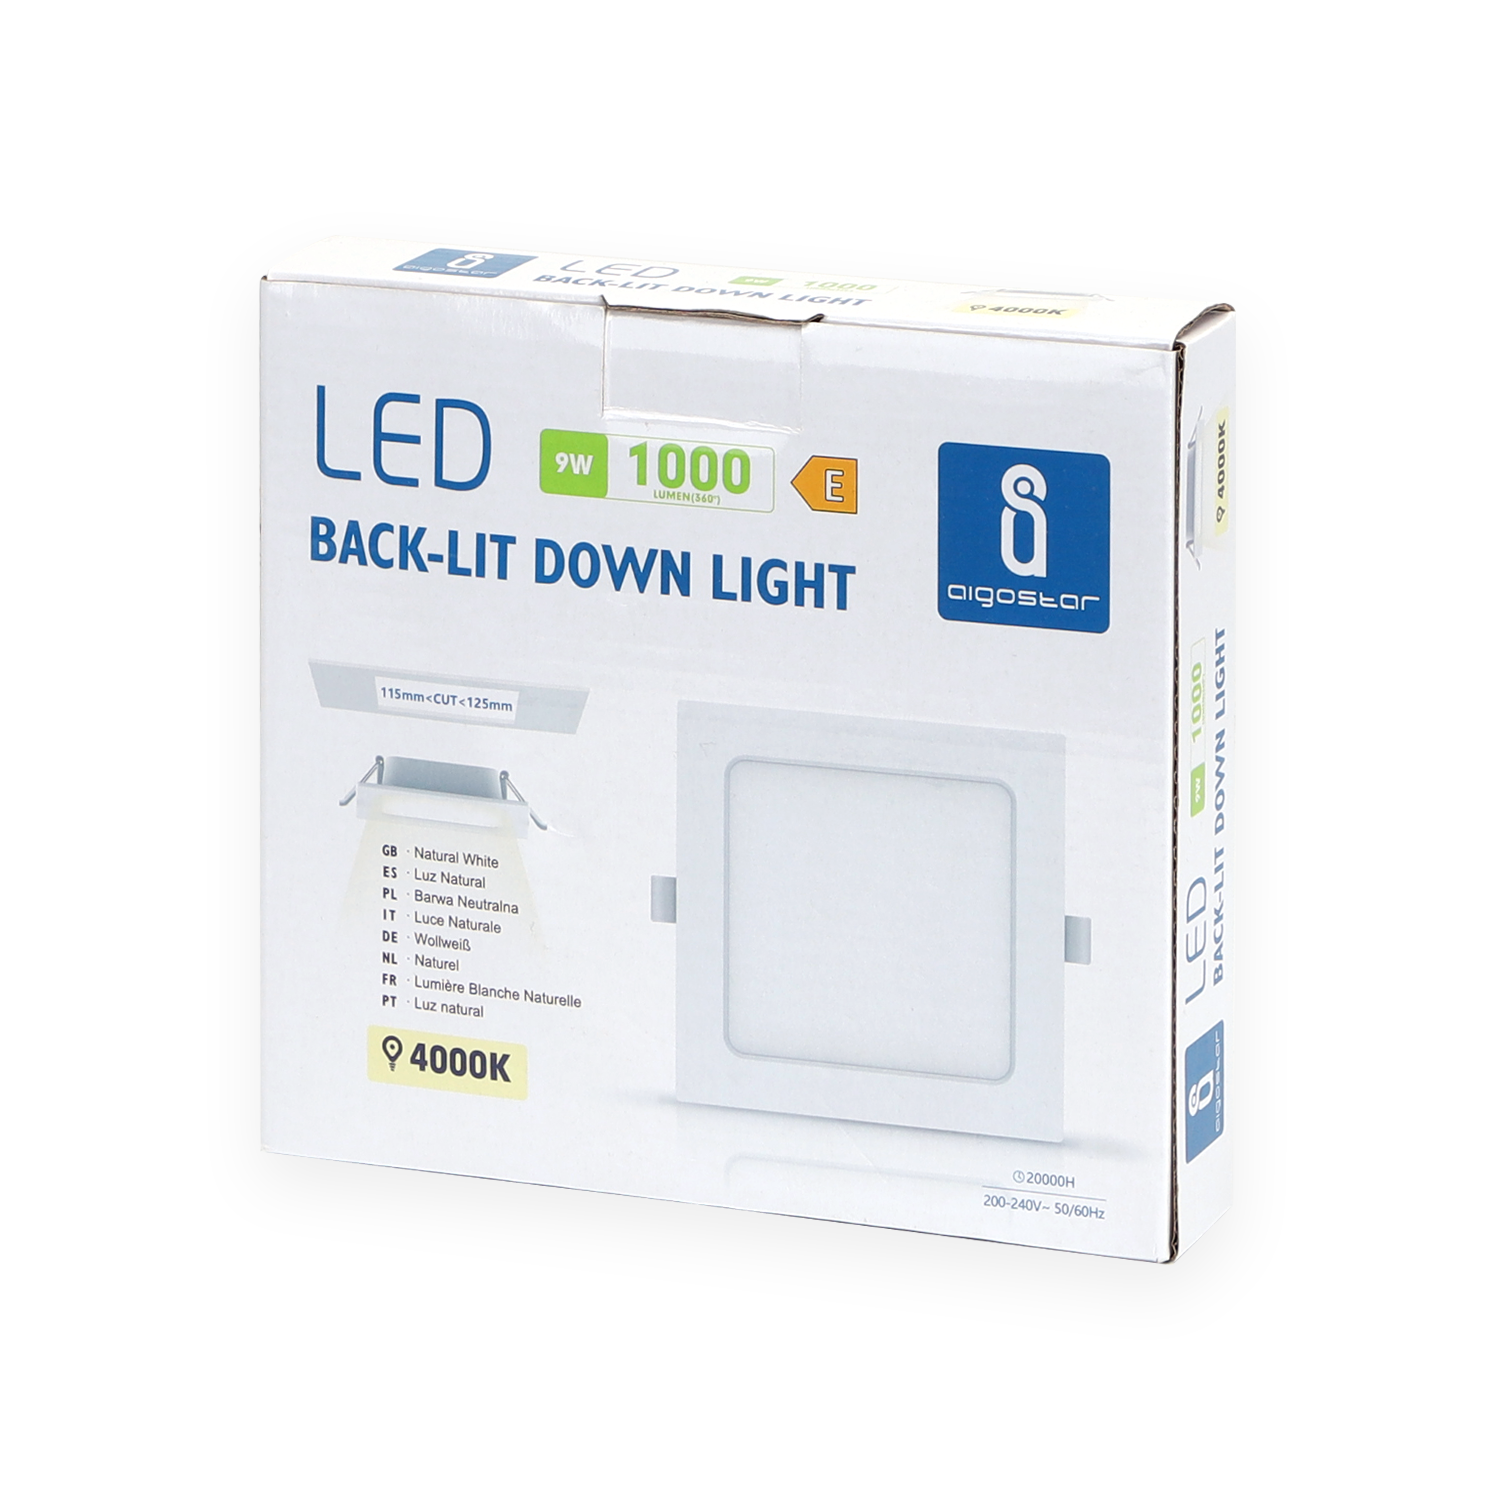 downlight E6 LED empotrable cuadrado 9W Luz natural